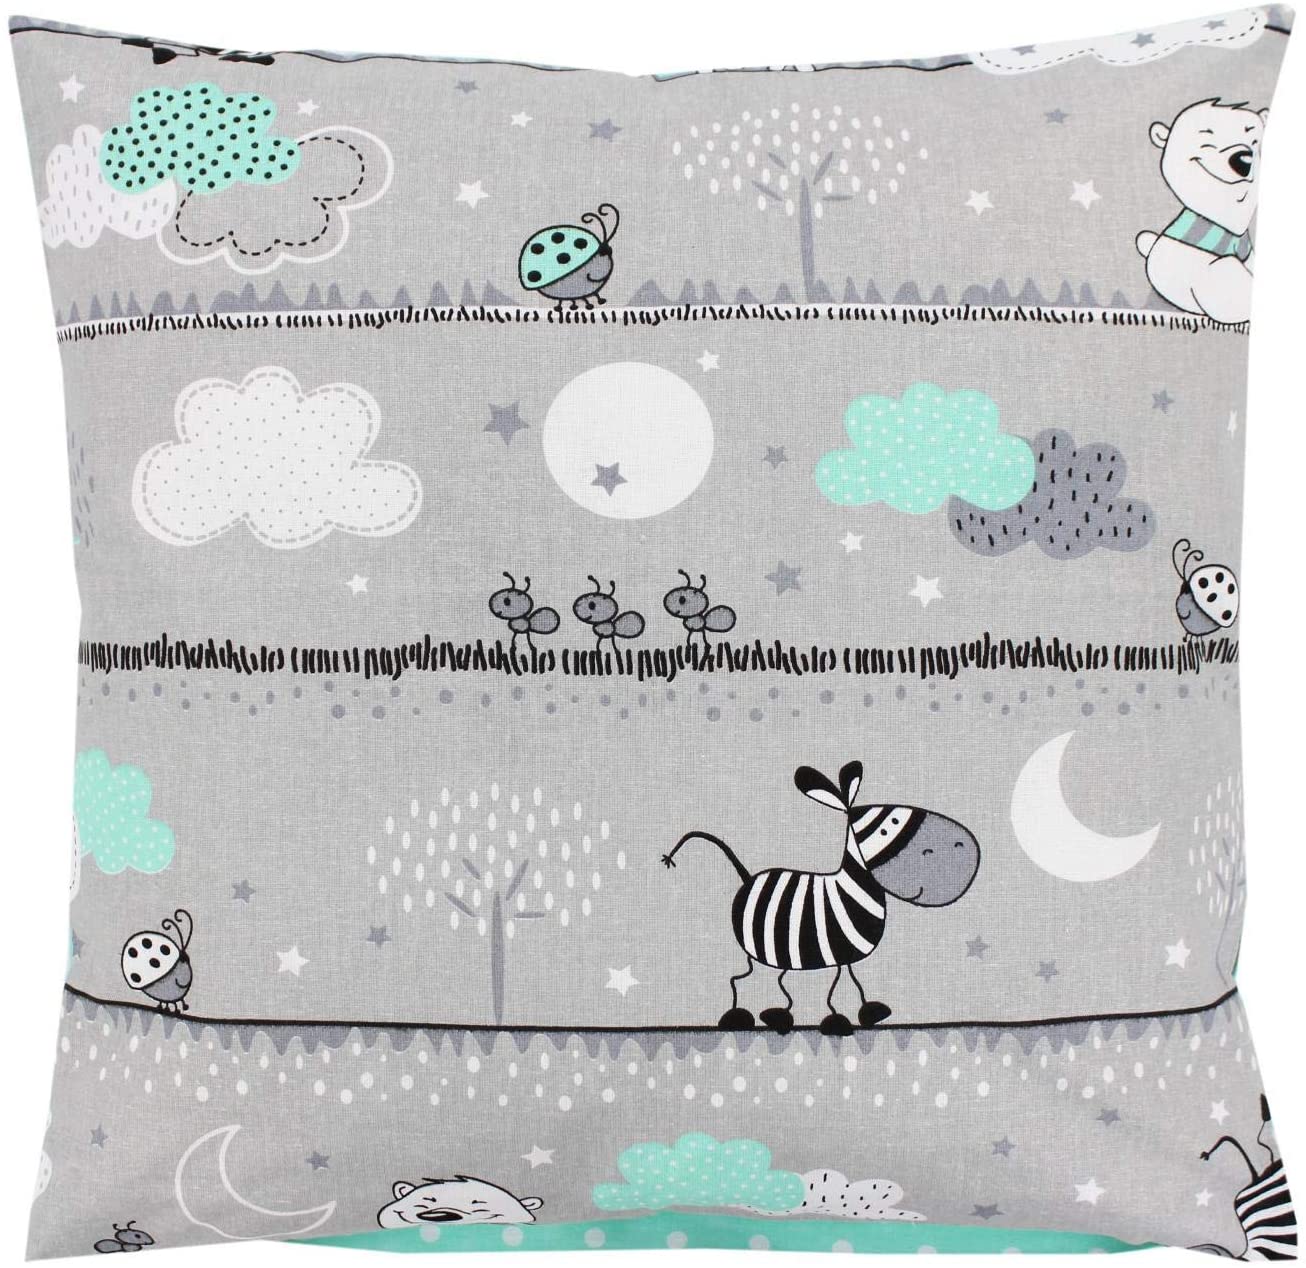 TupTam Children\'s Cushion Cover Decorative Patterned